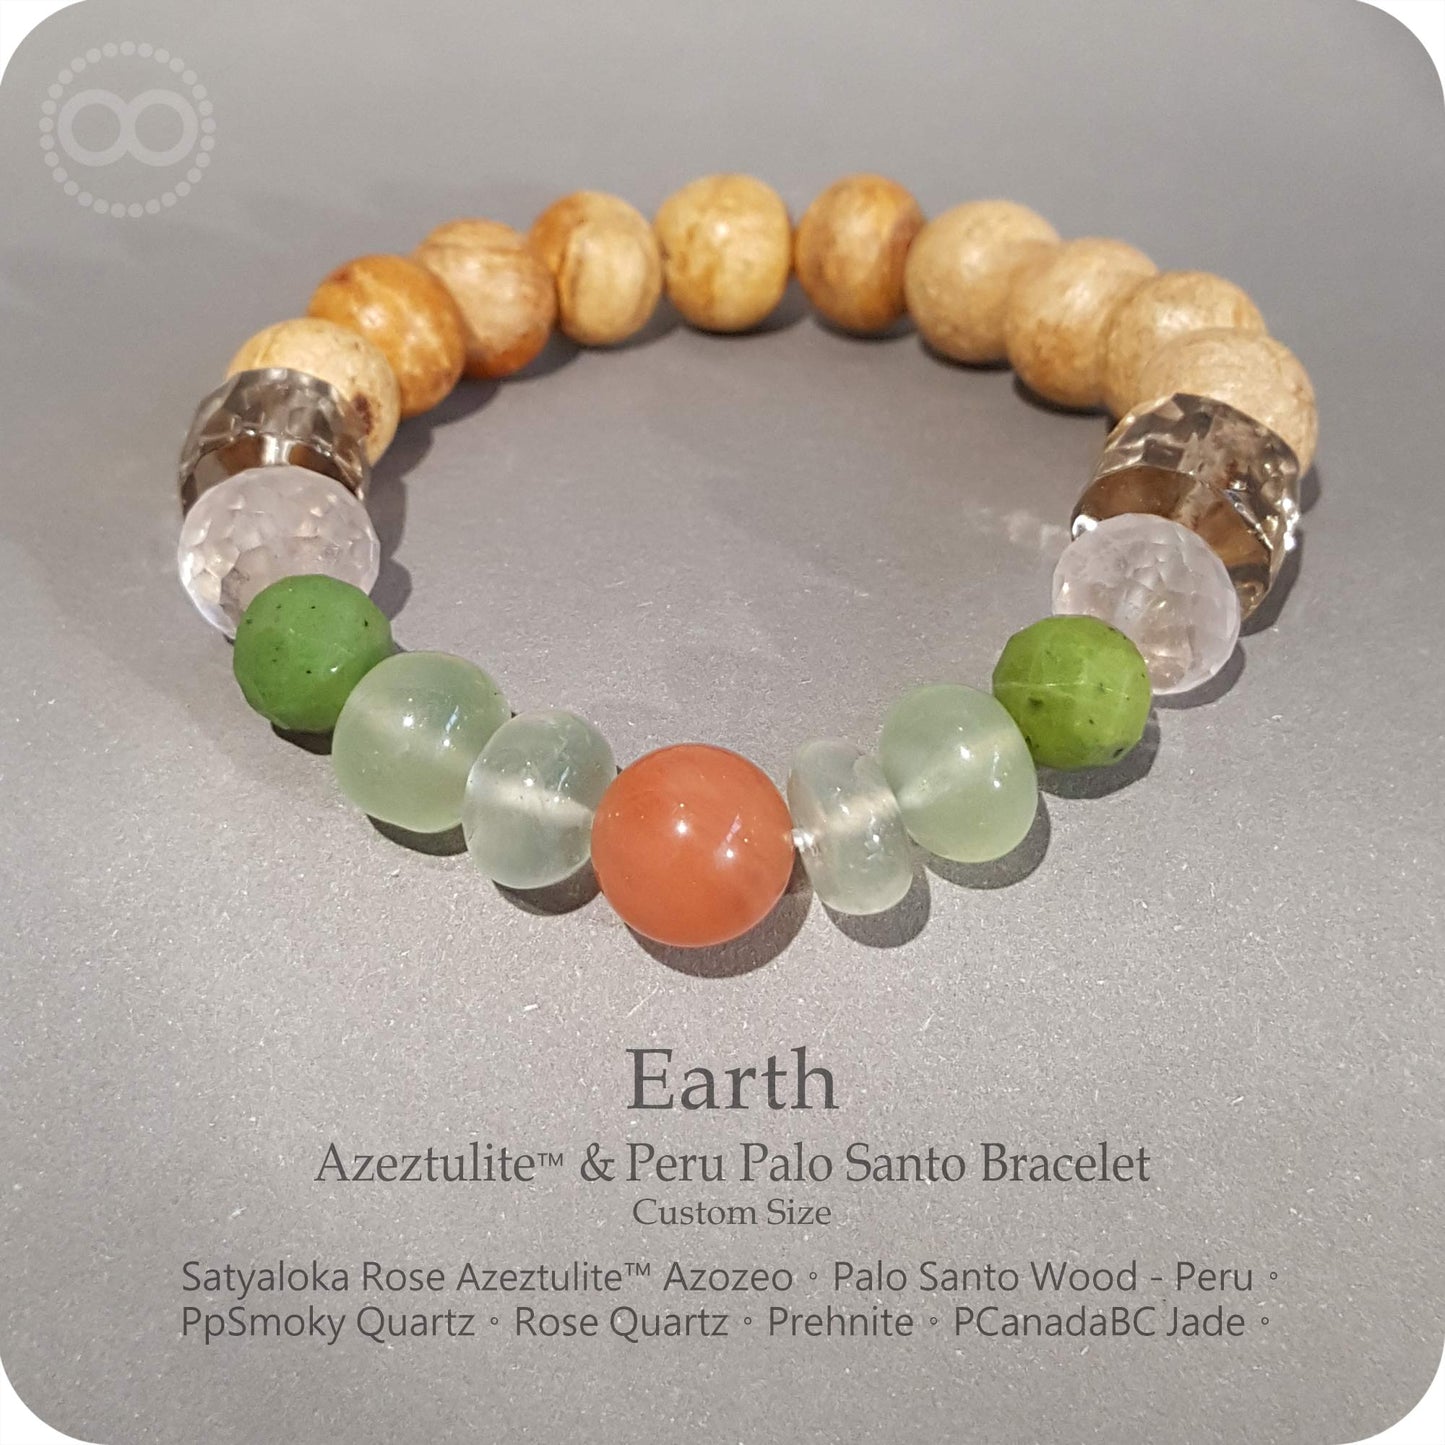 Earth Bracelet 阿賽斯特萊石 祕魯聖木手環 - EB219